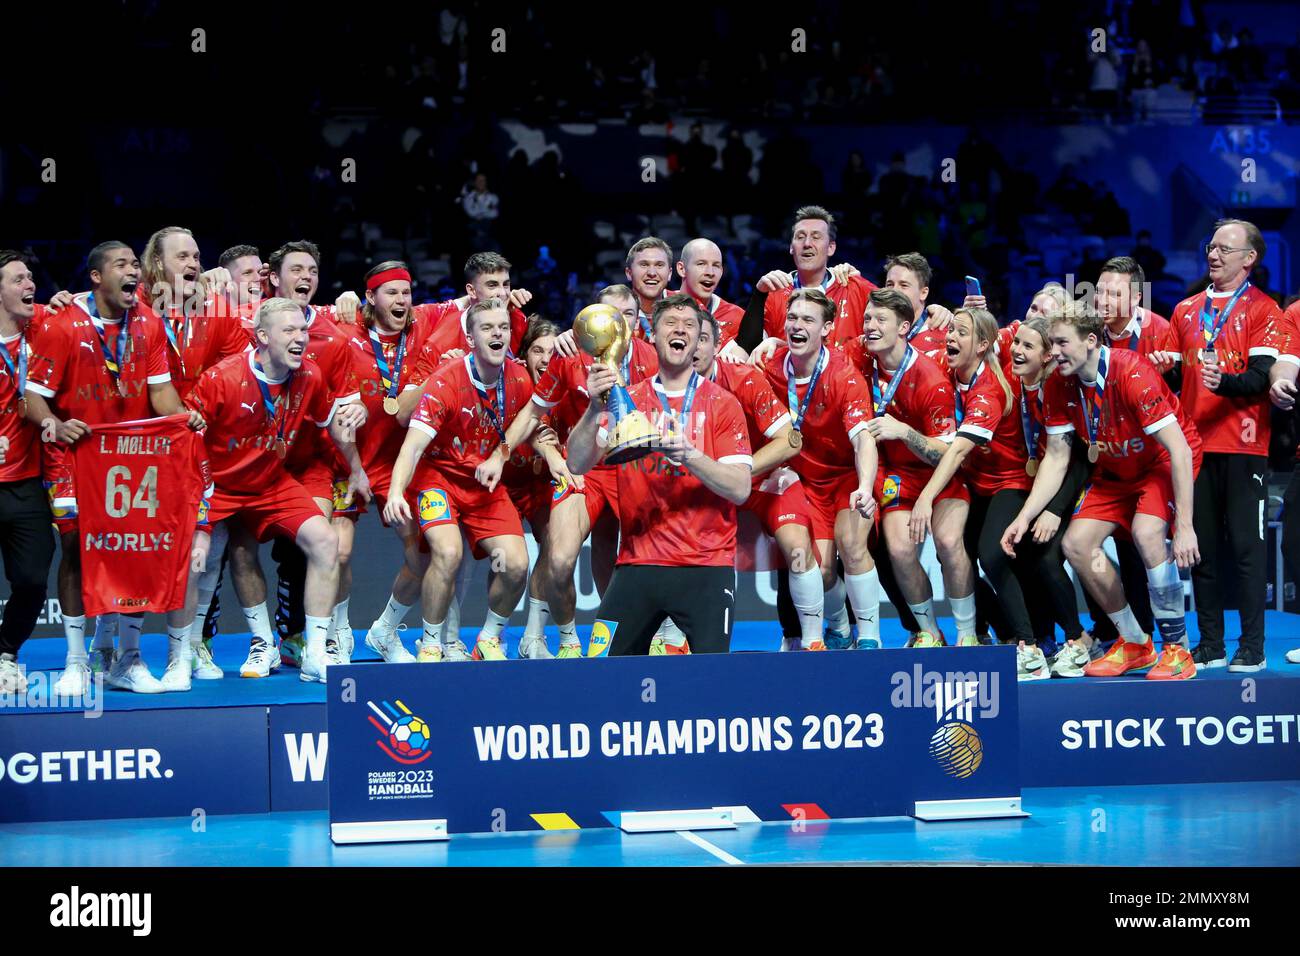 IHF Men's World Handball Championship 2023 Dates, Teams and History